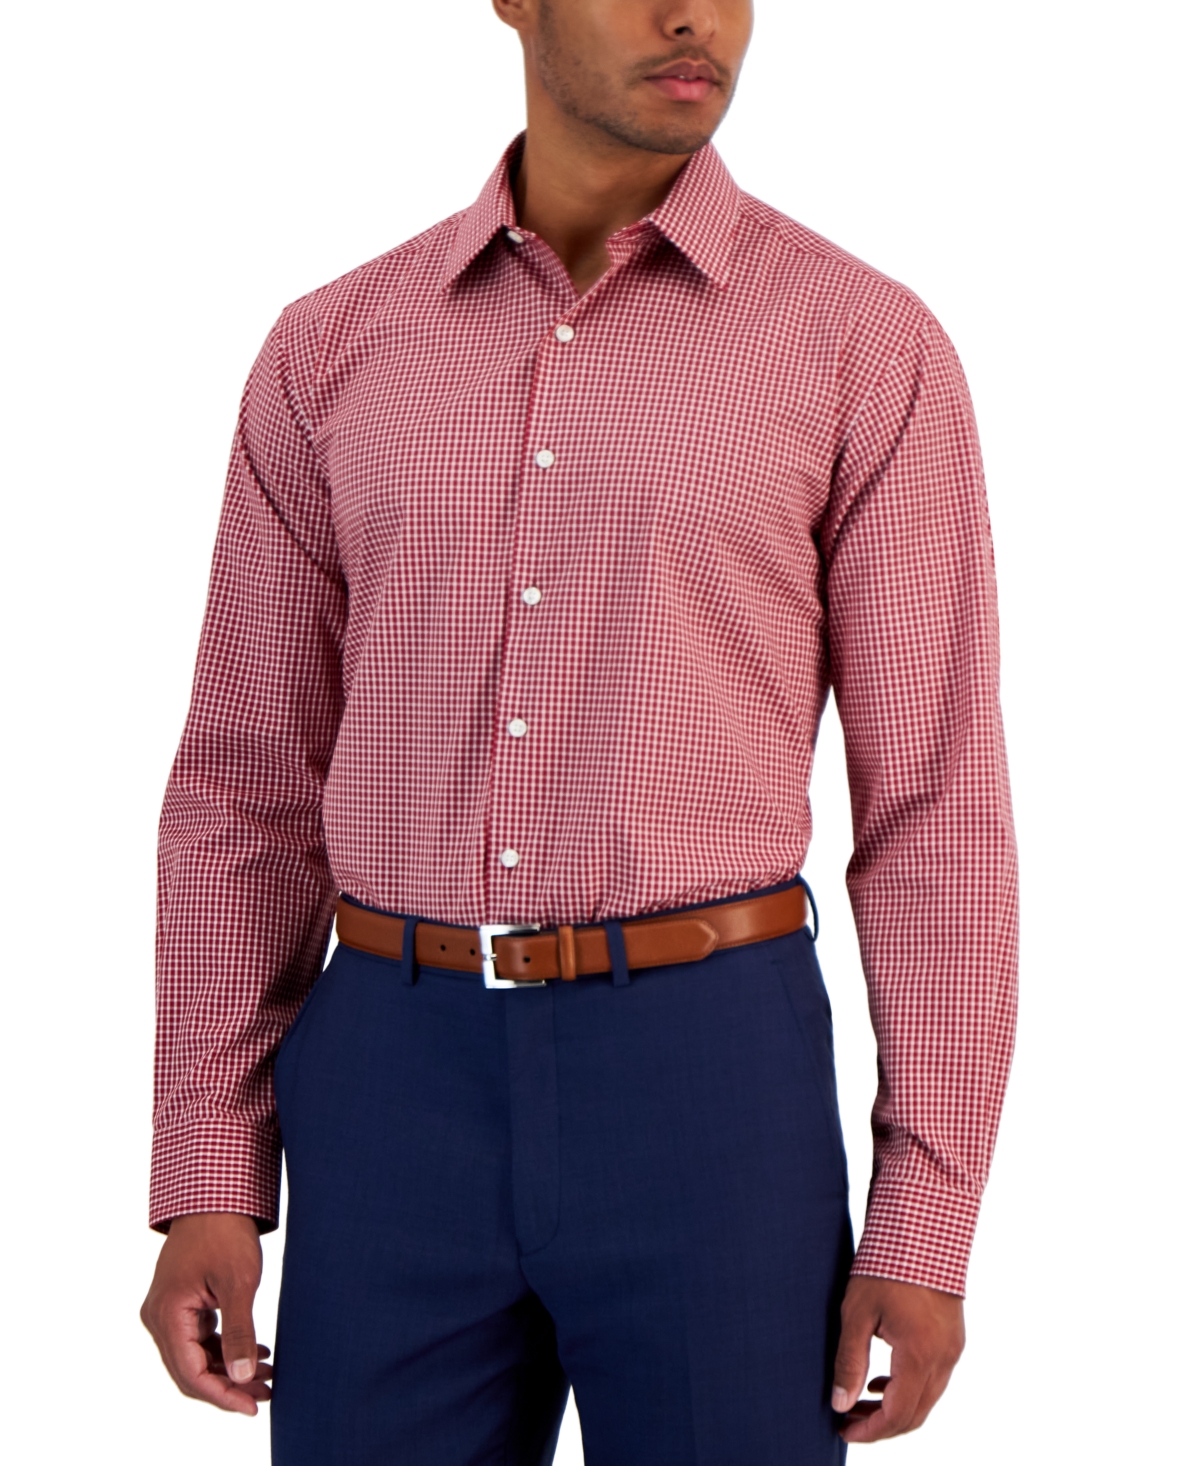 Men's Regular Fit Check Dress Shirt, Created for Macy's - Biking Red Whit